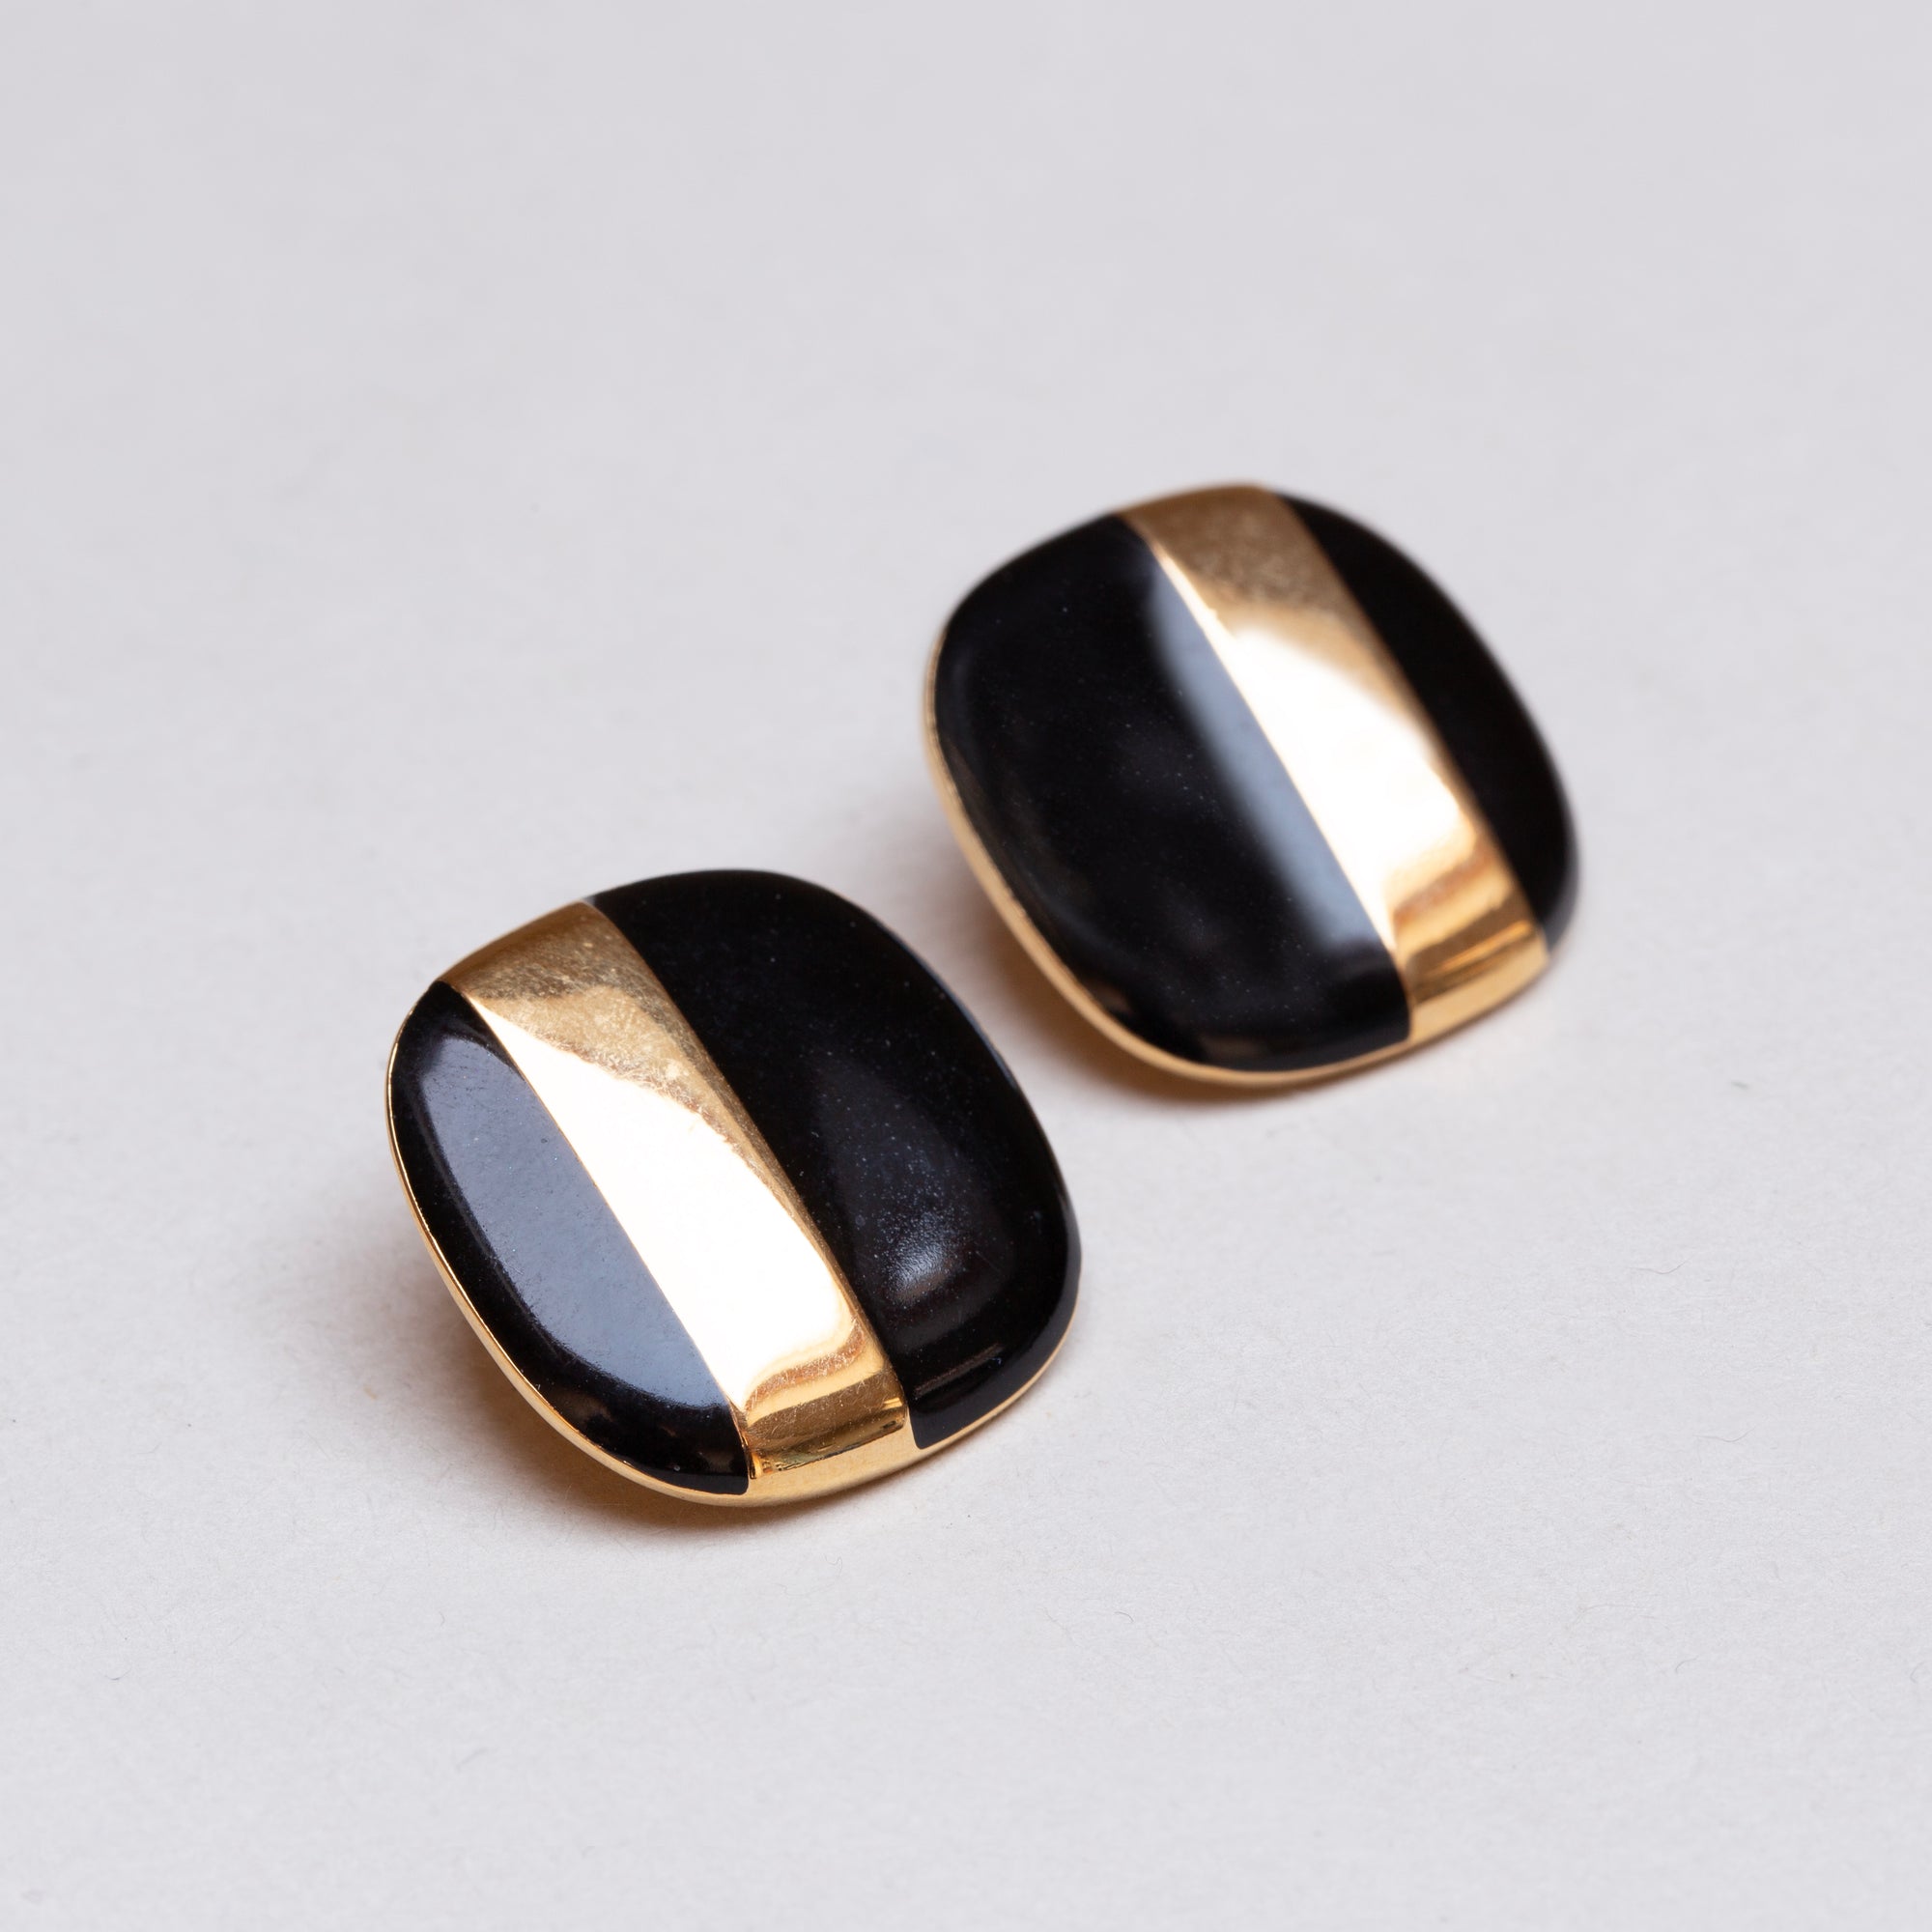 Vintage Gold and Black Enamel Clip-on Earrings